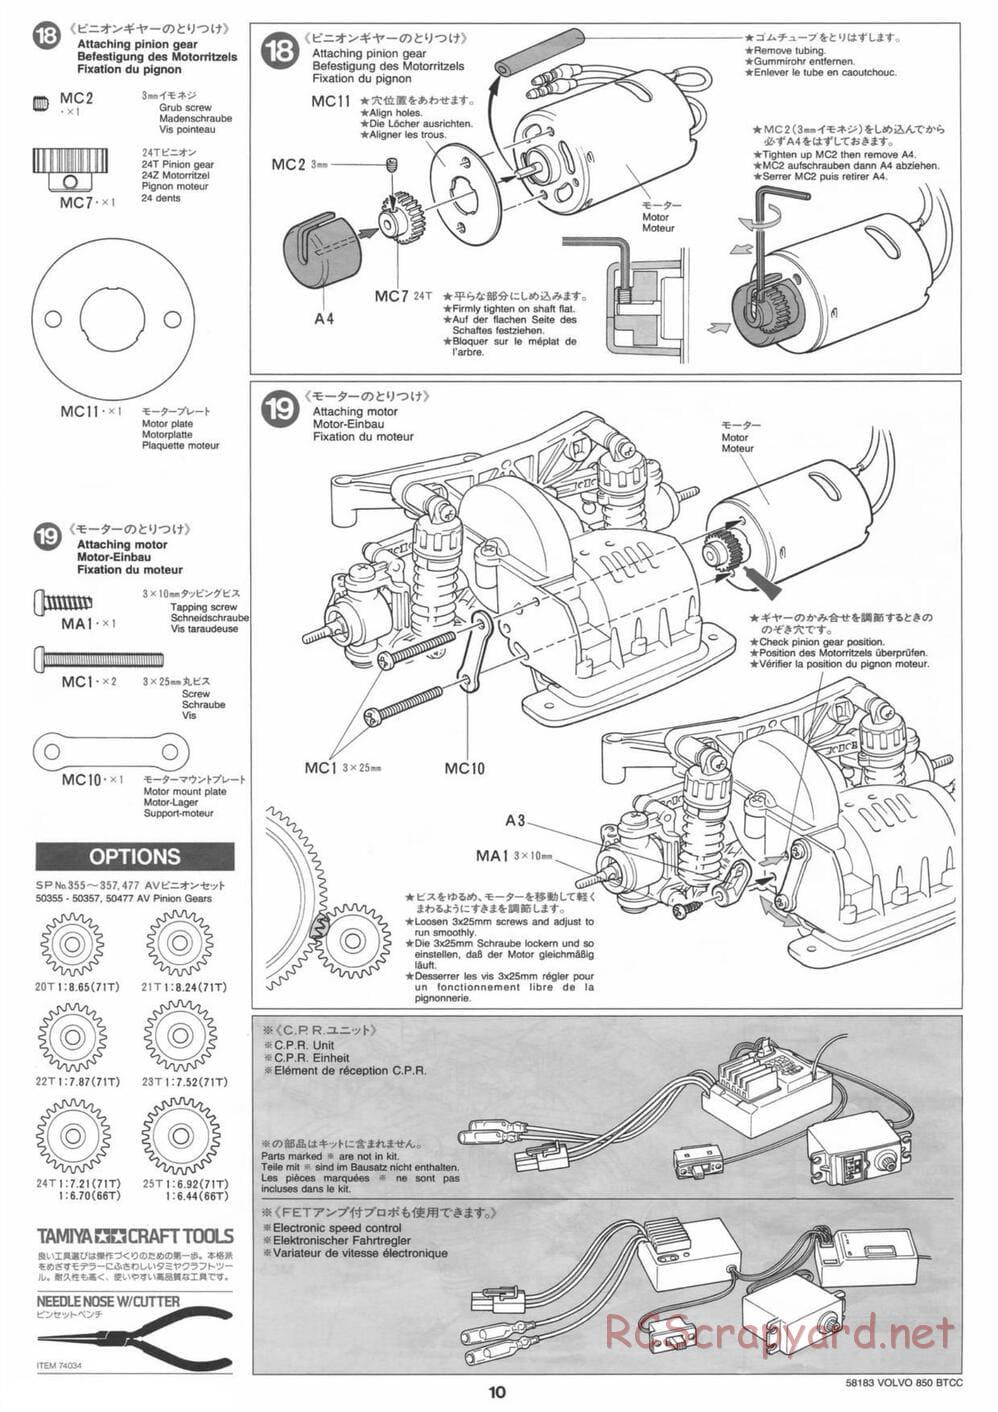 Tamiya - Volvo 850 BTCC - FF-01 Chassis - Manual - Page 10